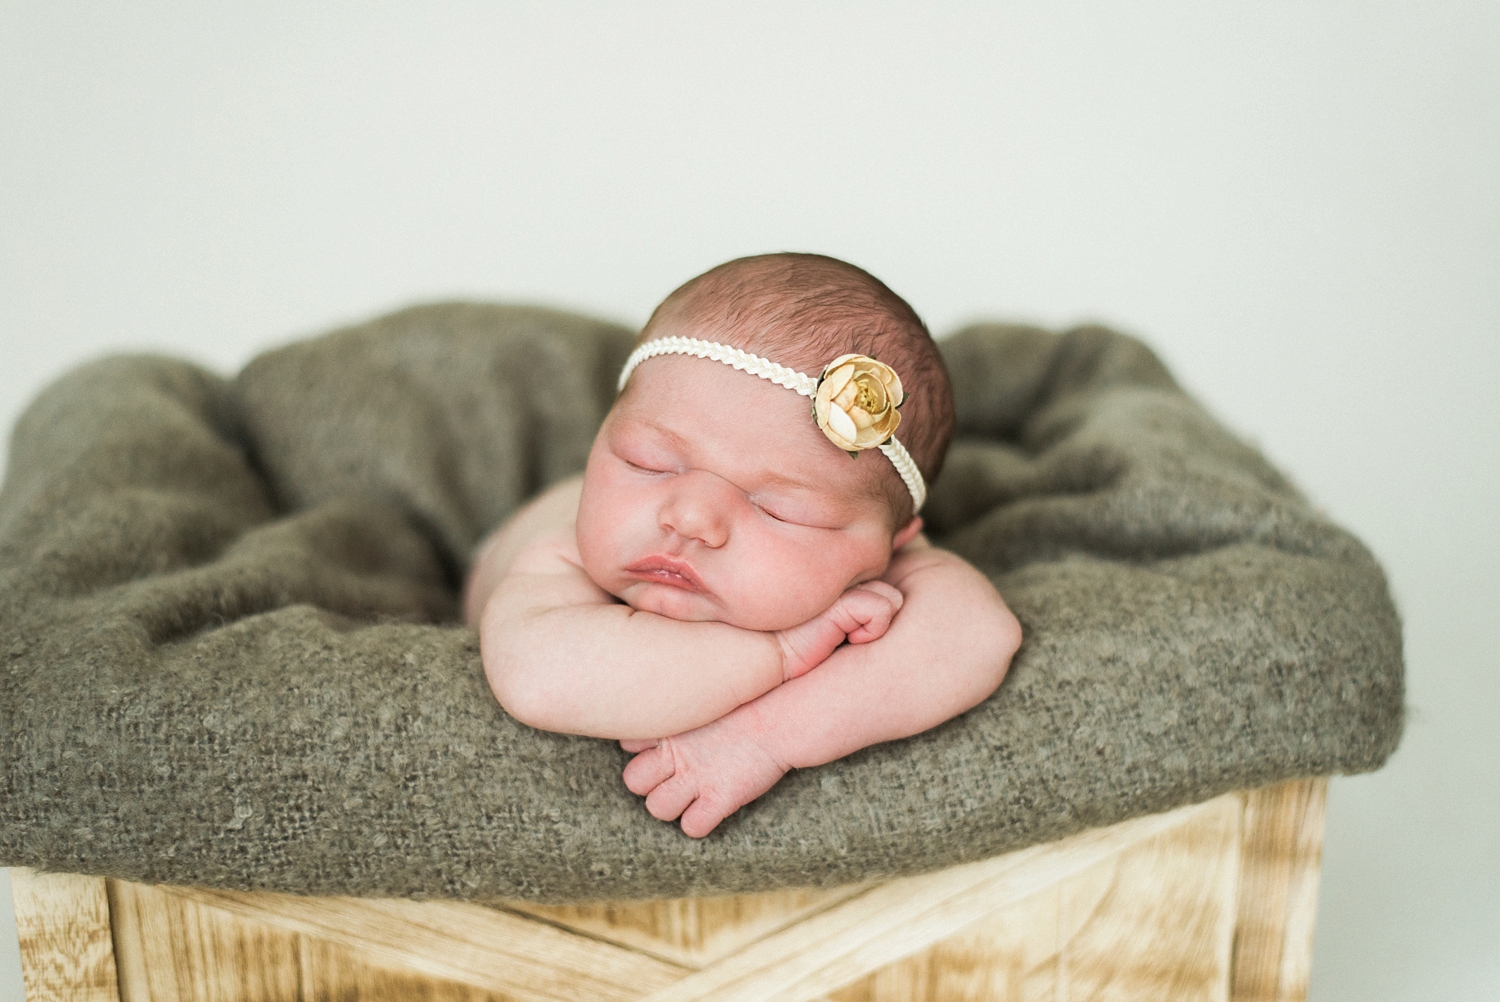 best-portland-oregon-newborn-photographer-sleeping-baby-girl-with-flower-headband-shelley-marie-photography-43.jpg